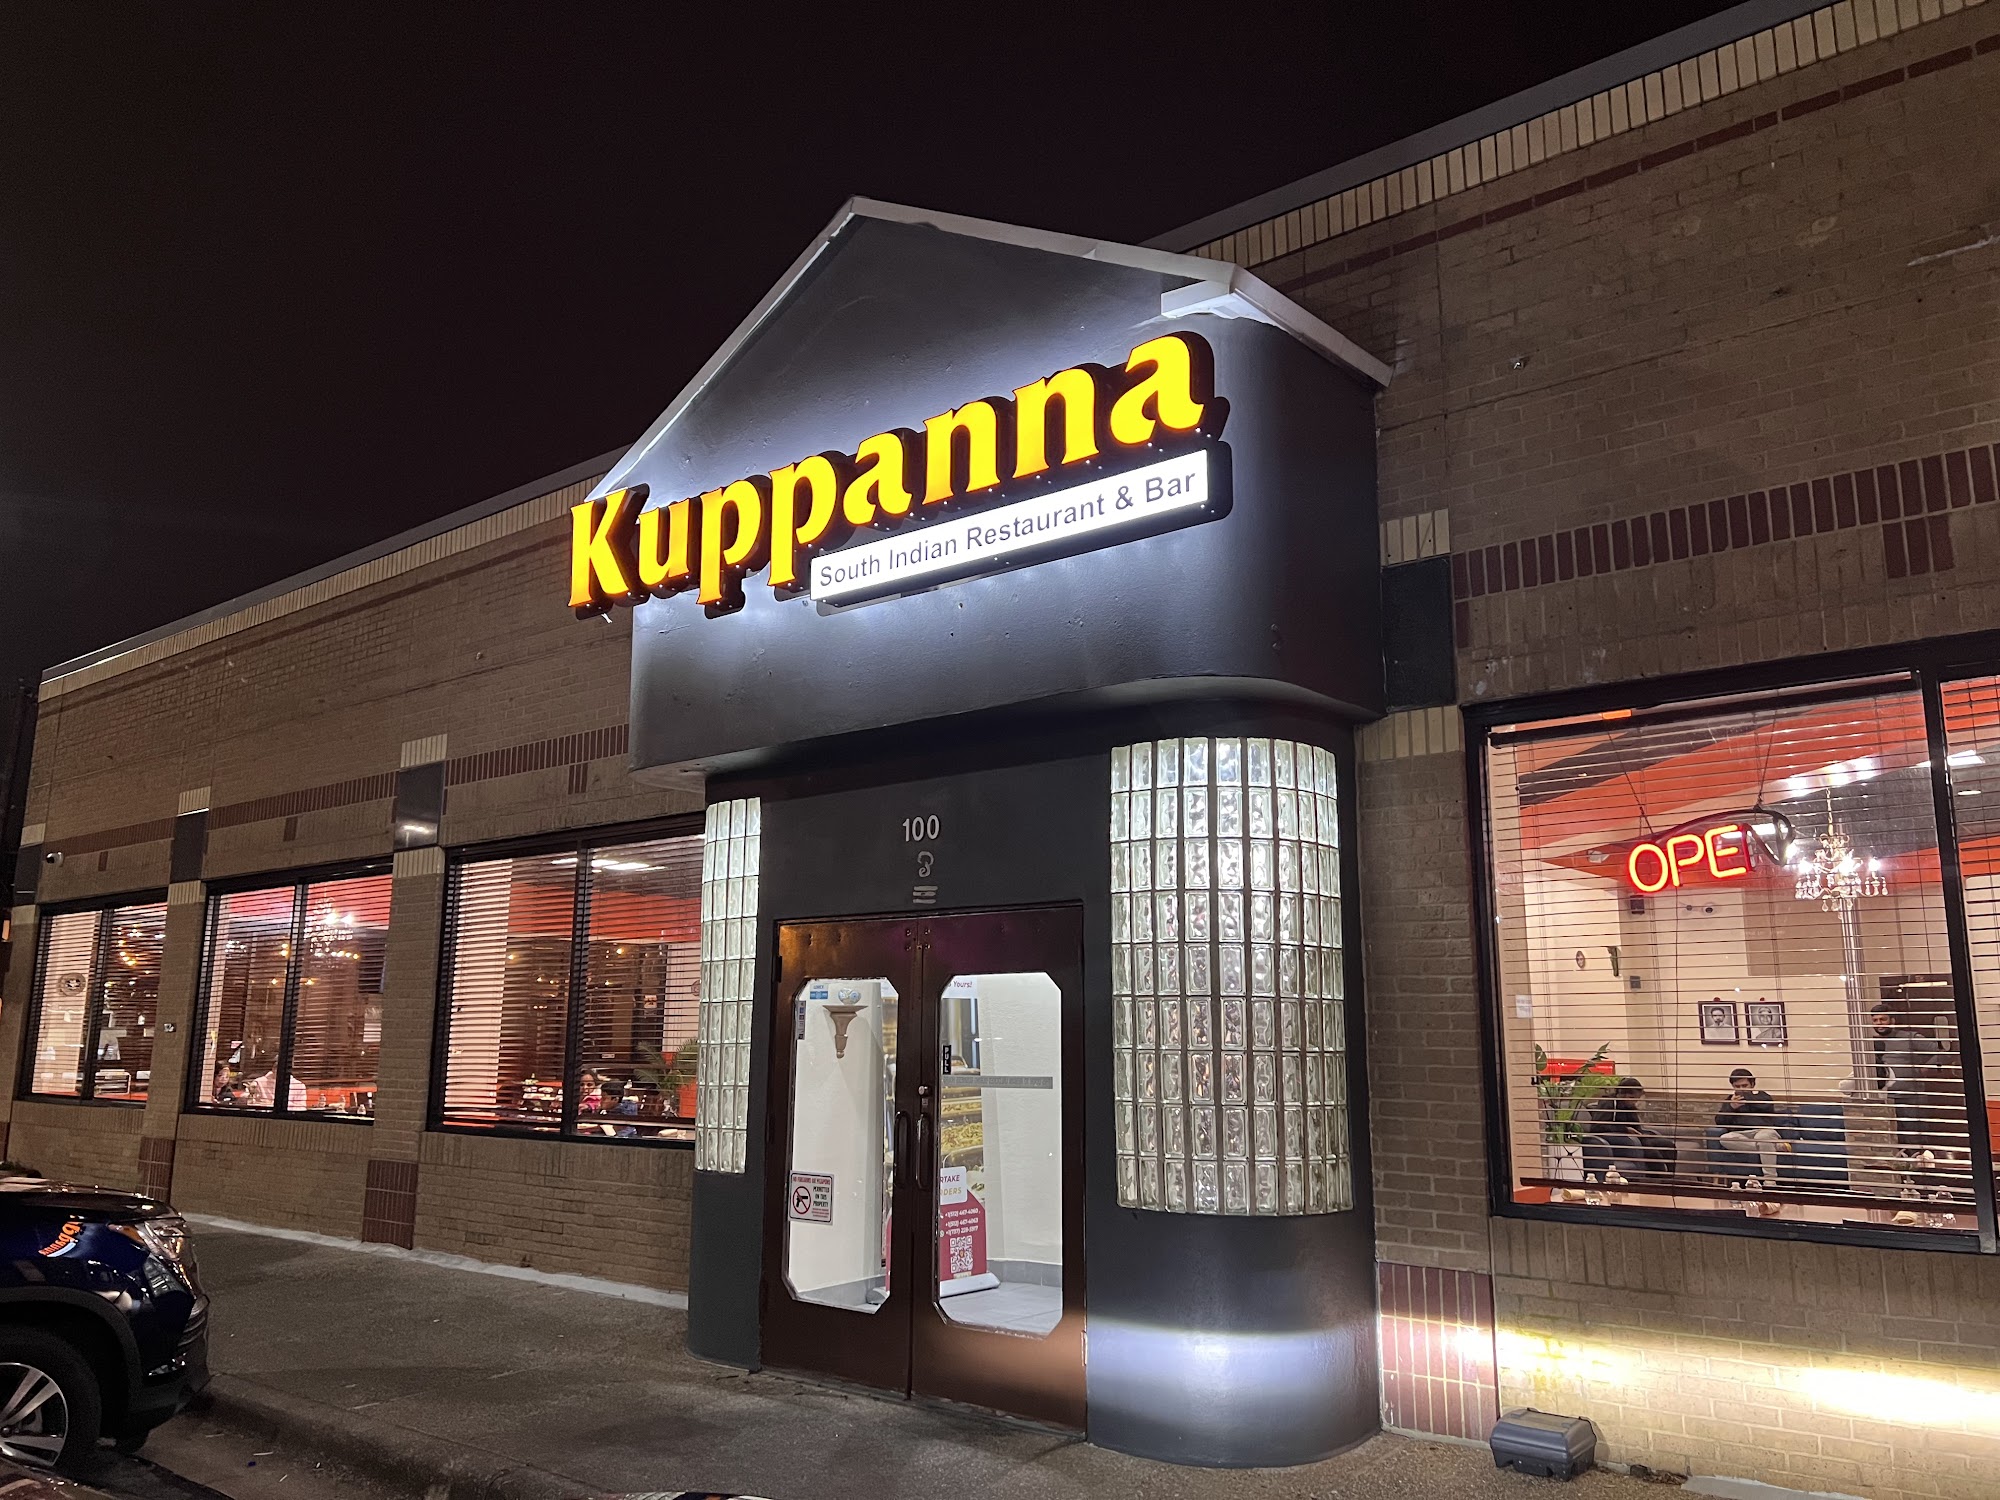 Kuppanna Austin | South Indian Restaurant & Bar